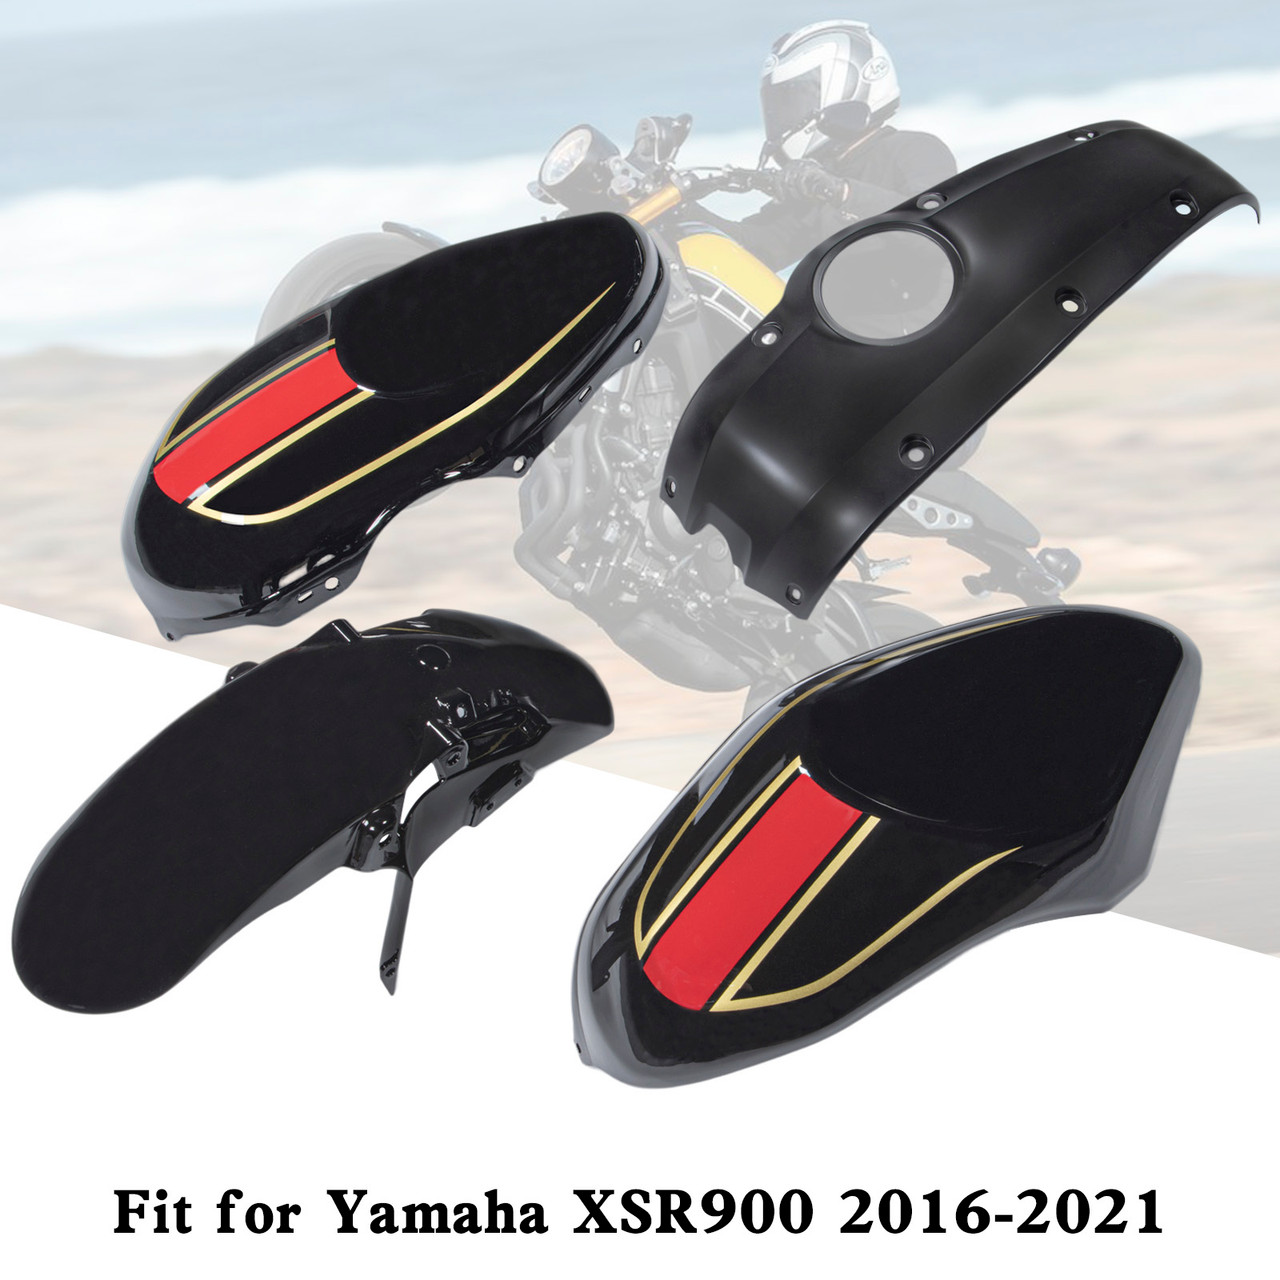 Injection ABS Plastic Bodywork Fairing Kit for Yamaha XSR900 2016-2021 #021